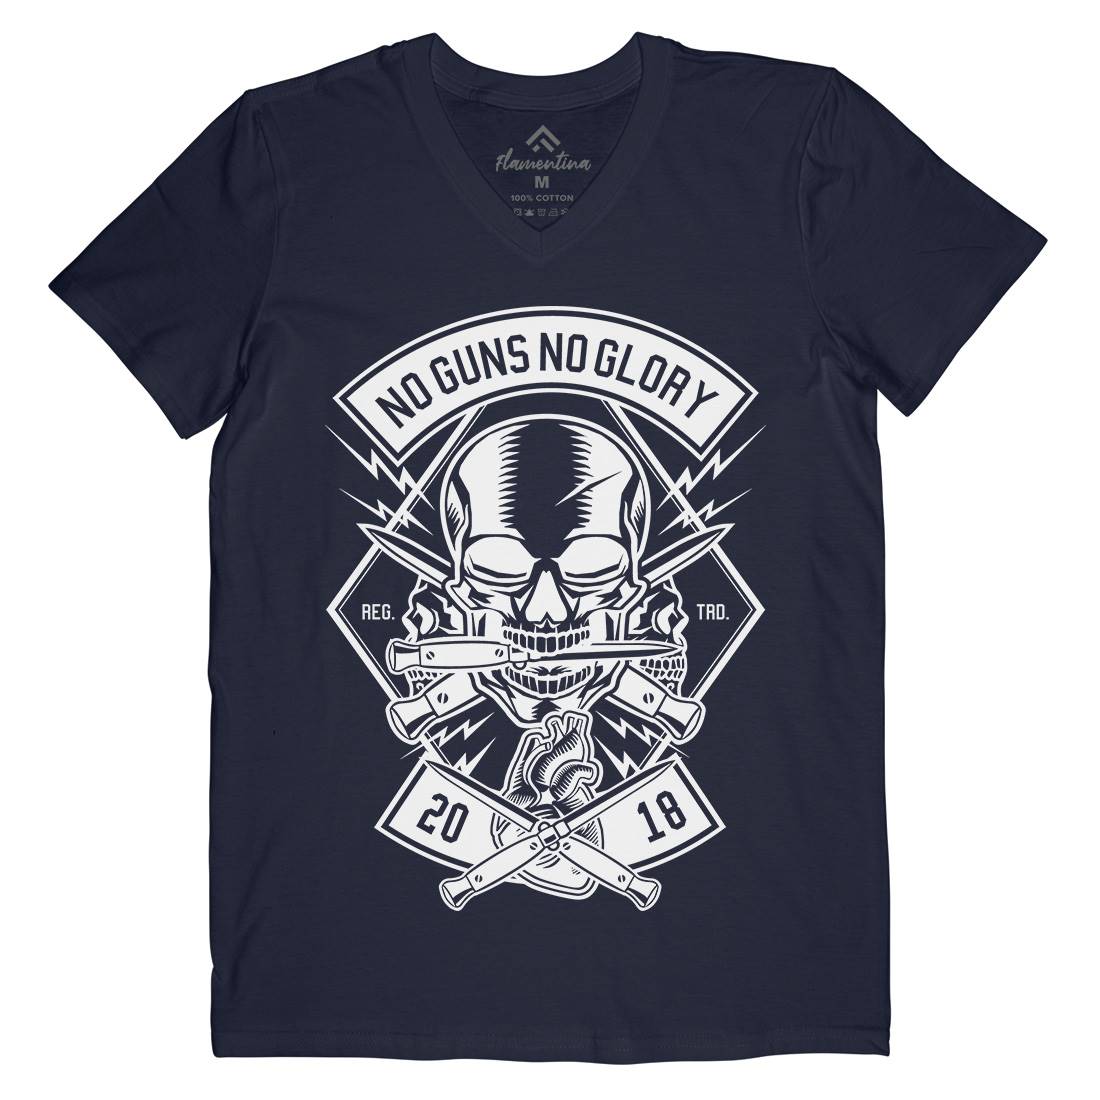 No Guns No Glory Mens Organic V-Neck T-Shirt Army B588